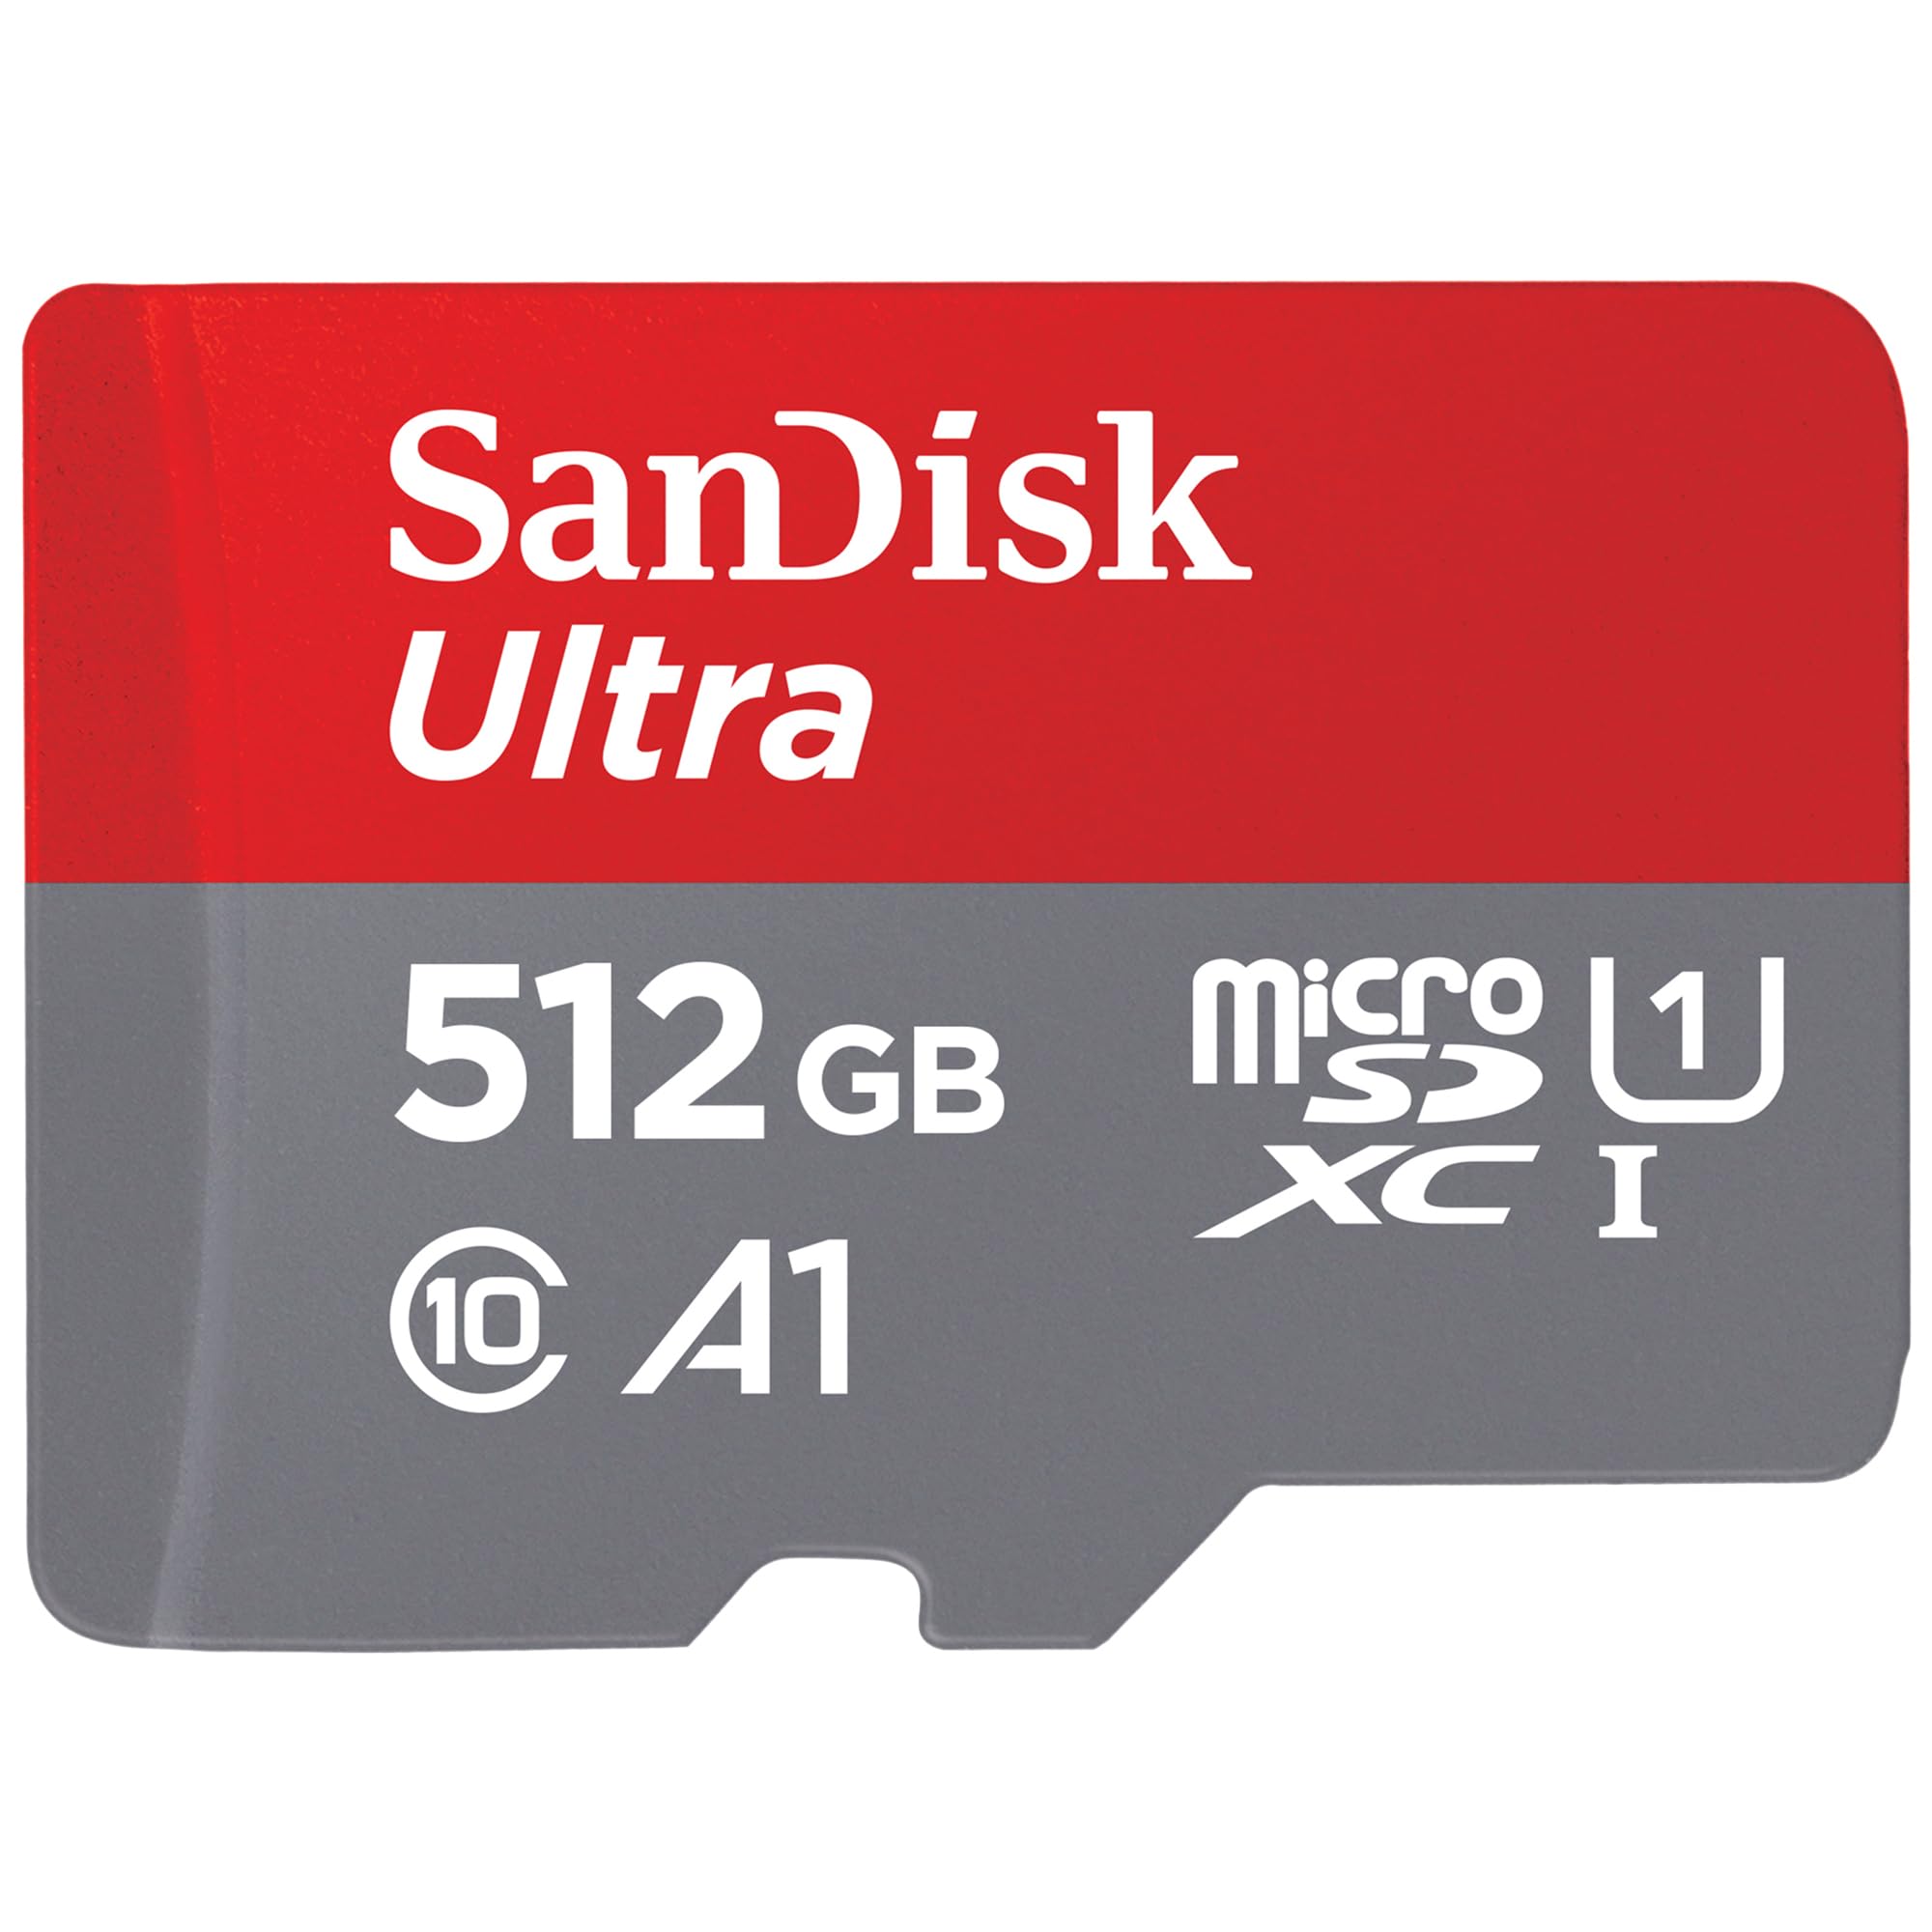 512GB SanDisk Ultra microSDXC UHS-I Memory Card w/ Adapter $26 + Free Shipping